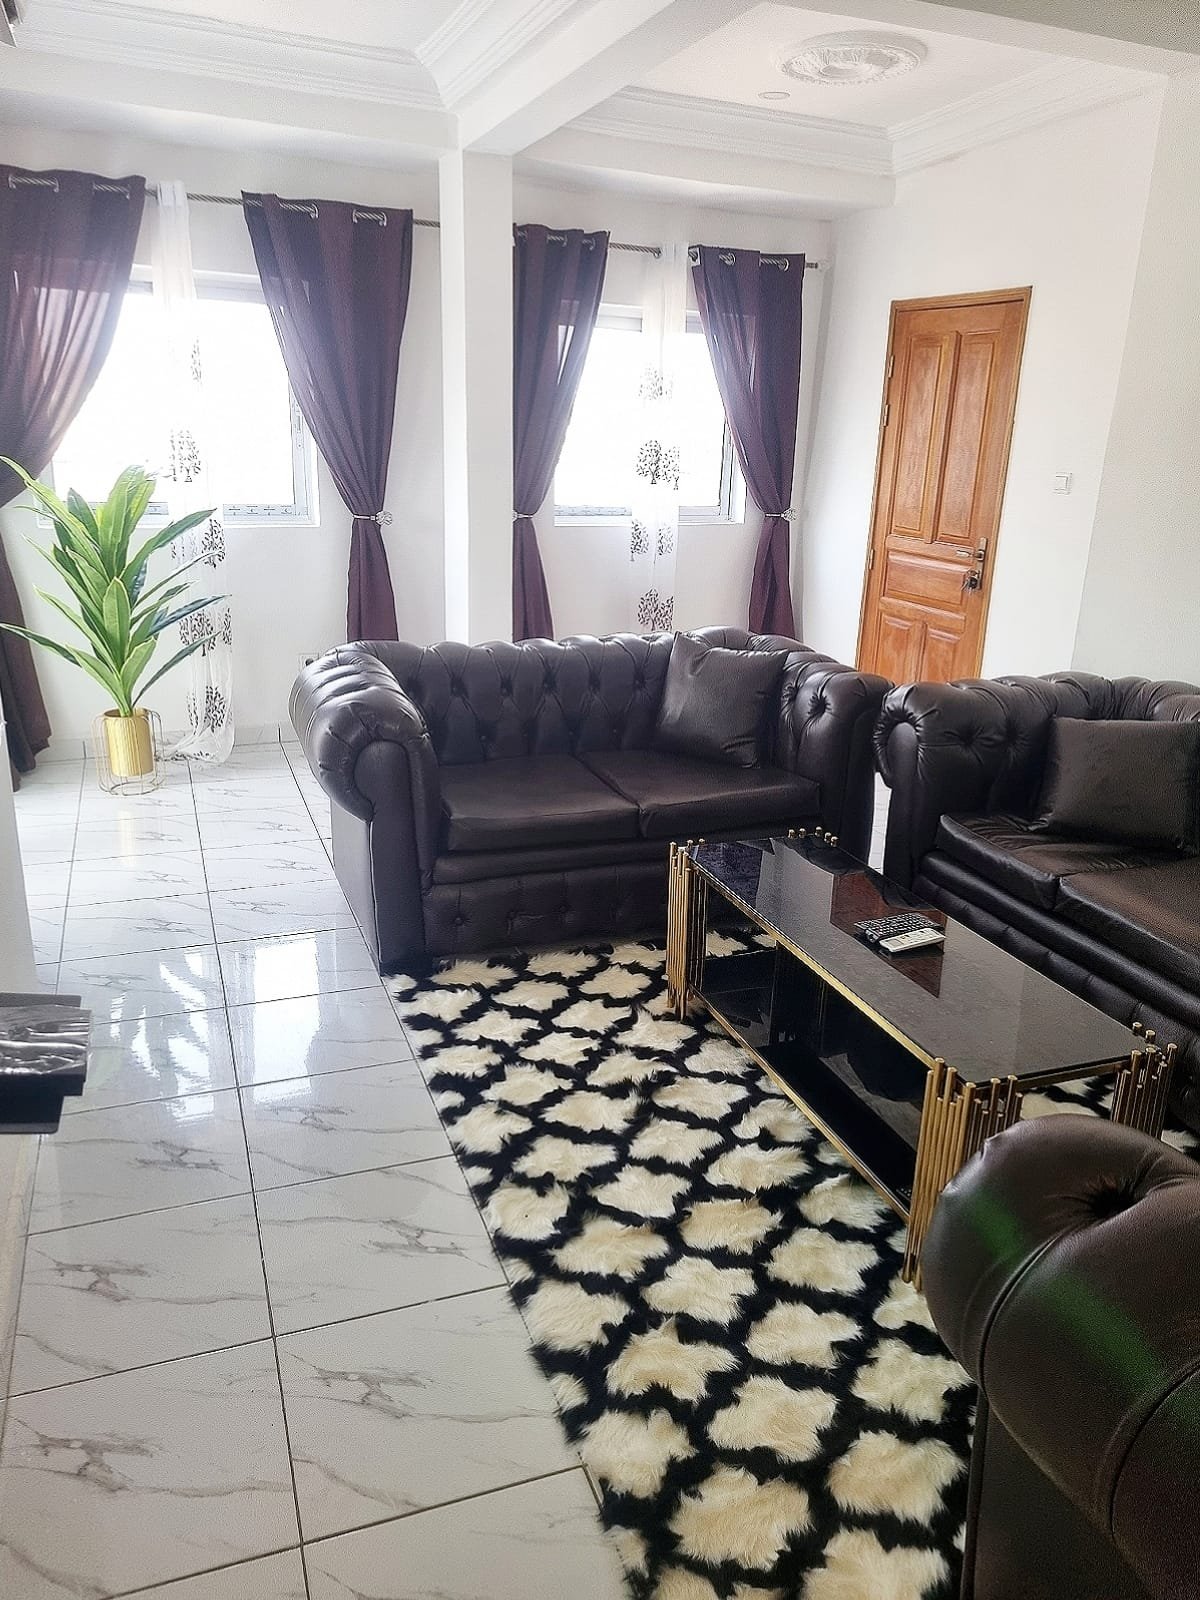 Appartement meublé haut standing à louer à Douala Bepanda